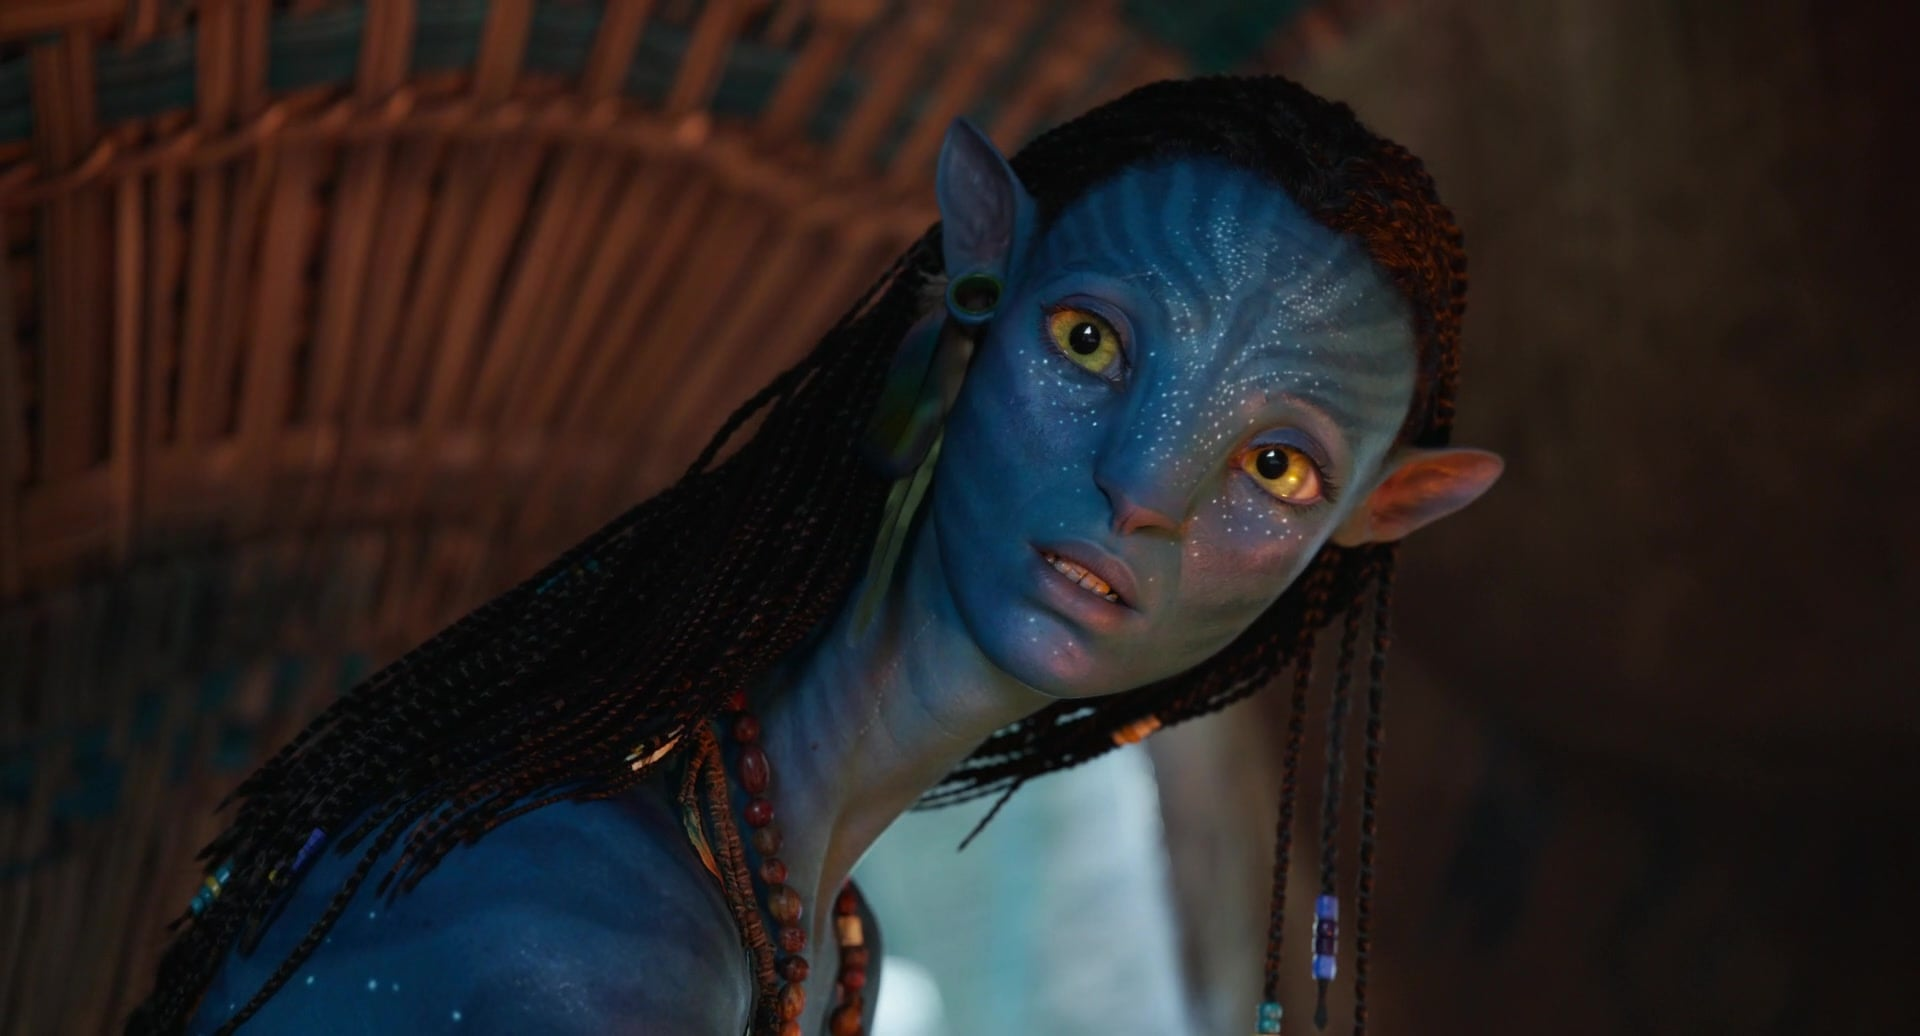 Sony cameras find big break in Hollywood with new 'Avatar' film